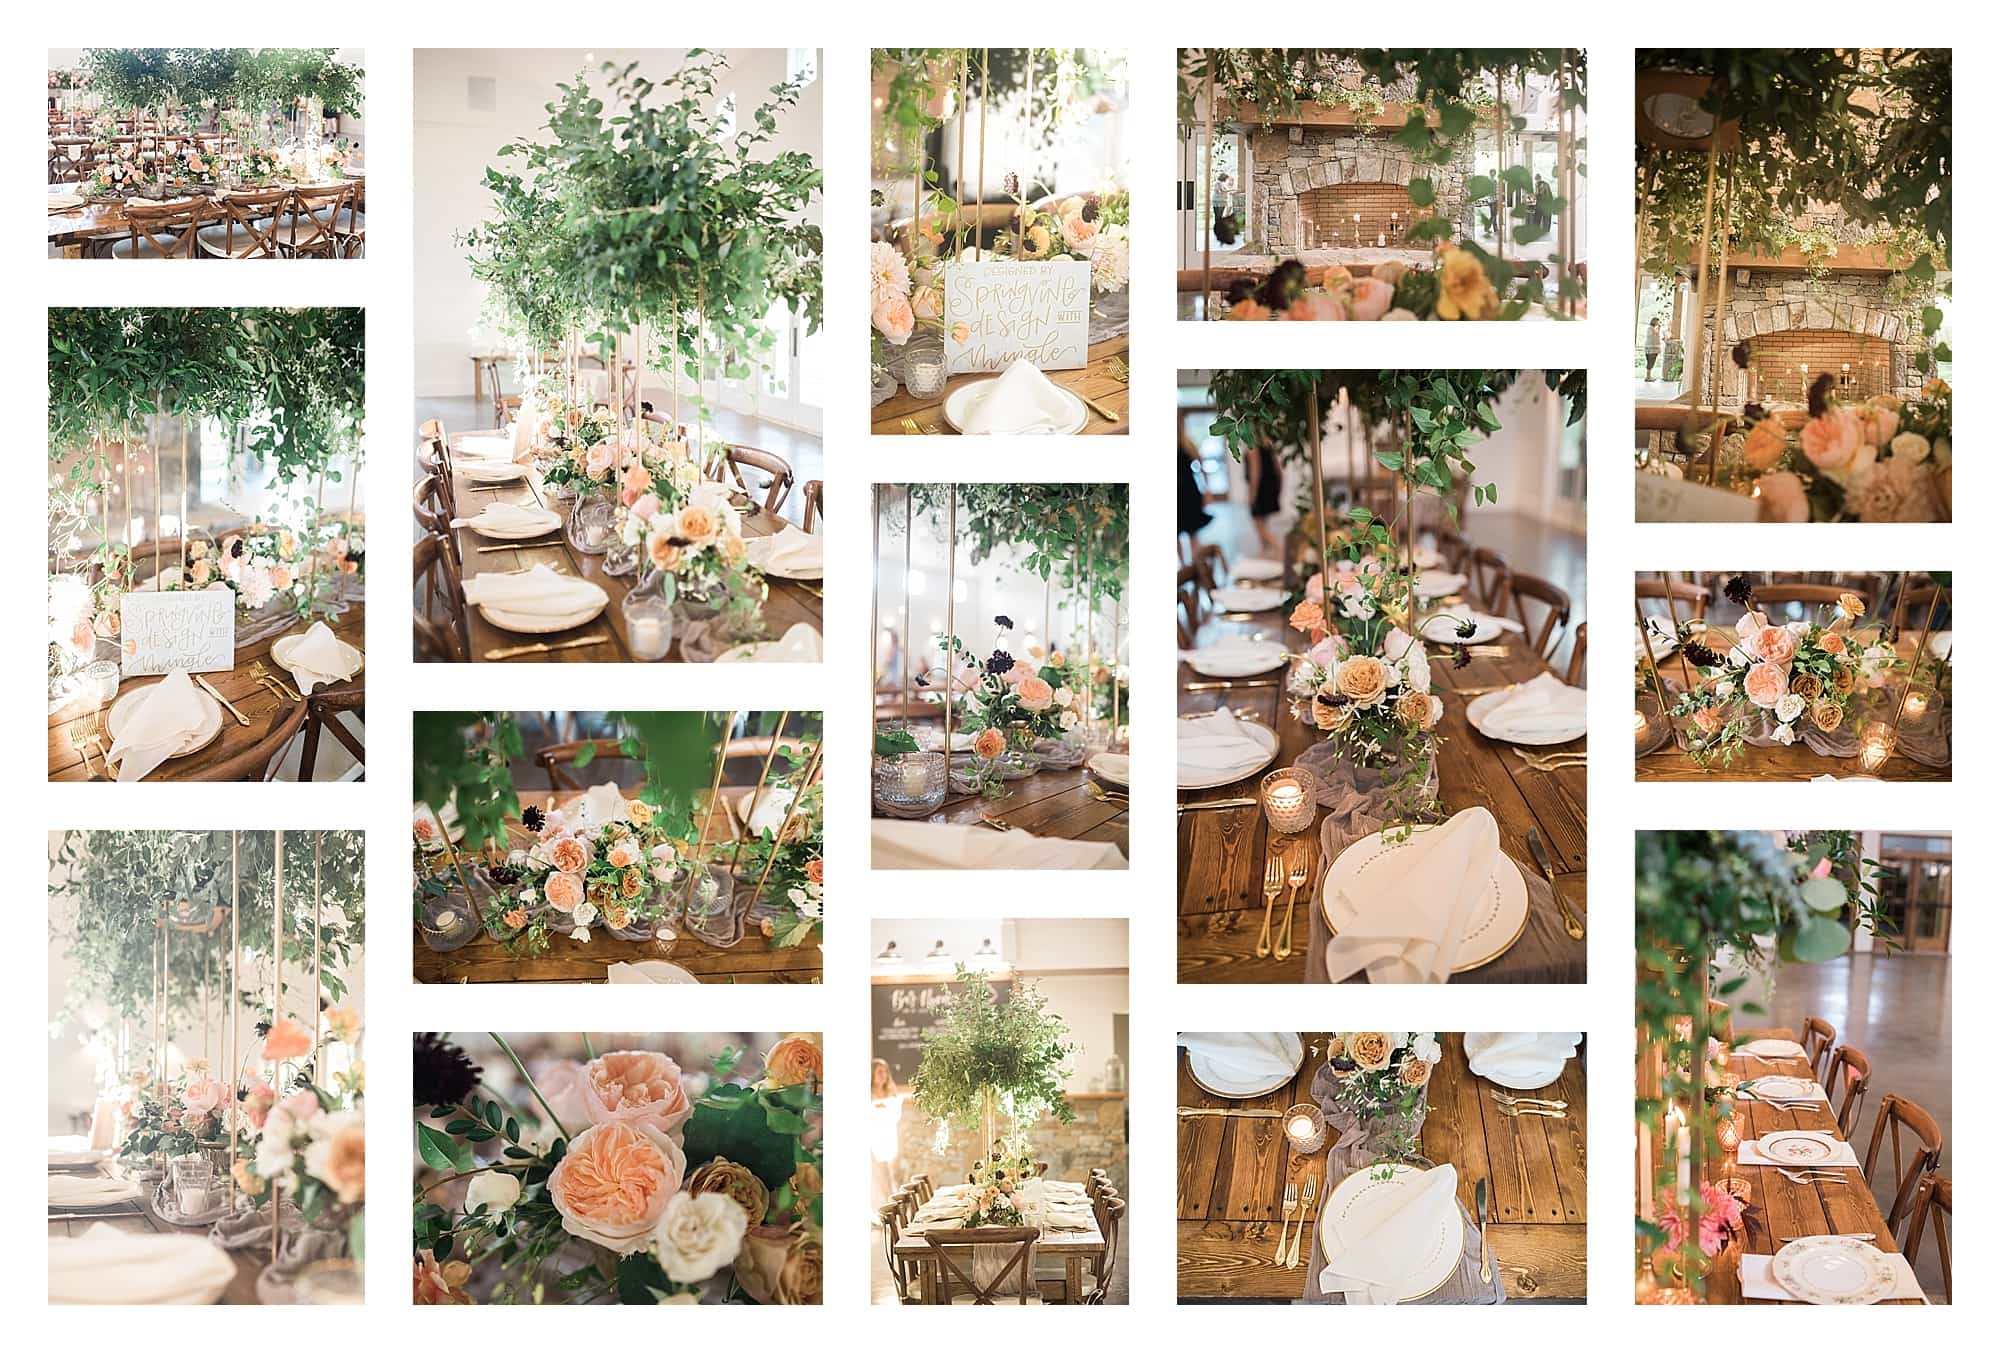 Peach and cream wedding table design ideas